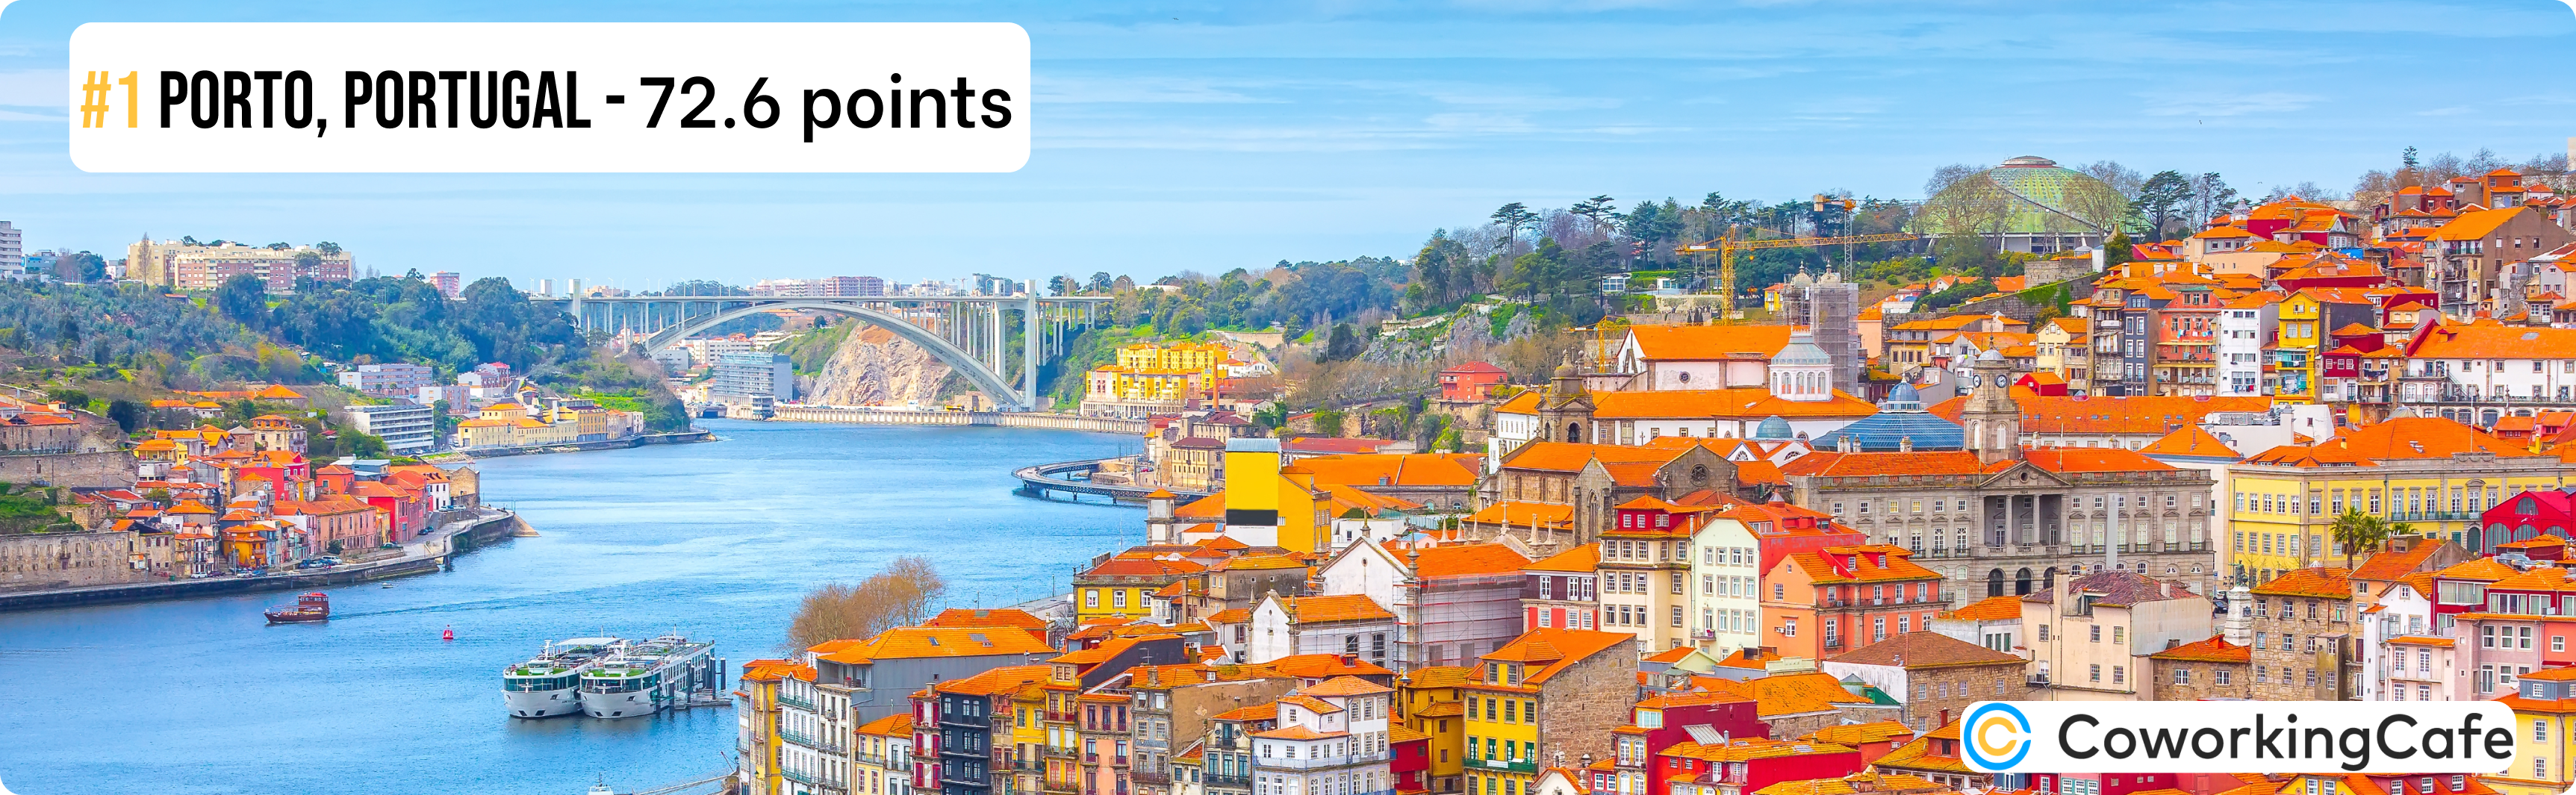 Porto, Portugal – Total Points: 72.6